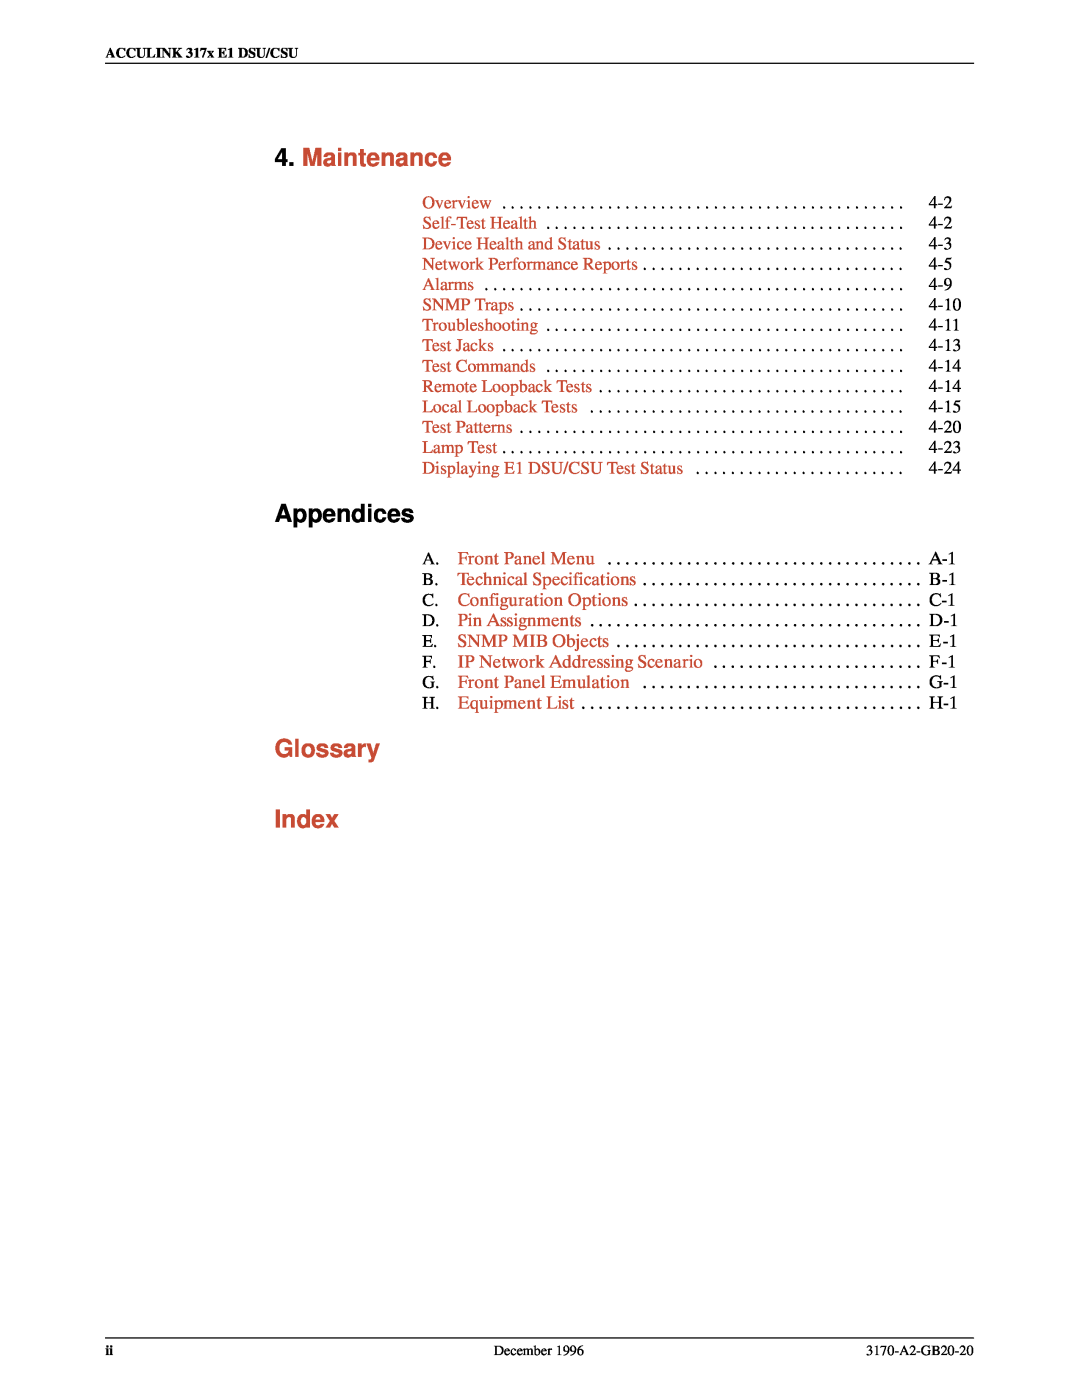 Paradyne 317x E1 manual Maintenance, Glossary Index, Appendices 